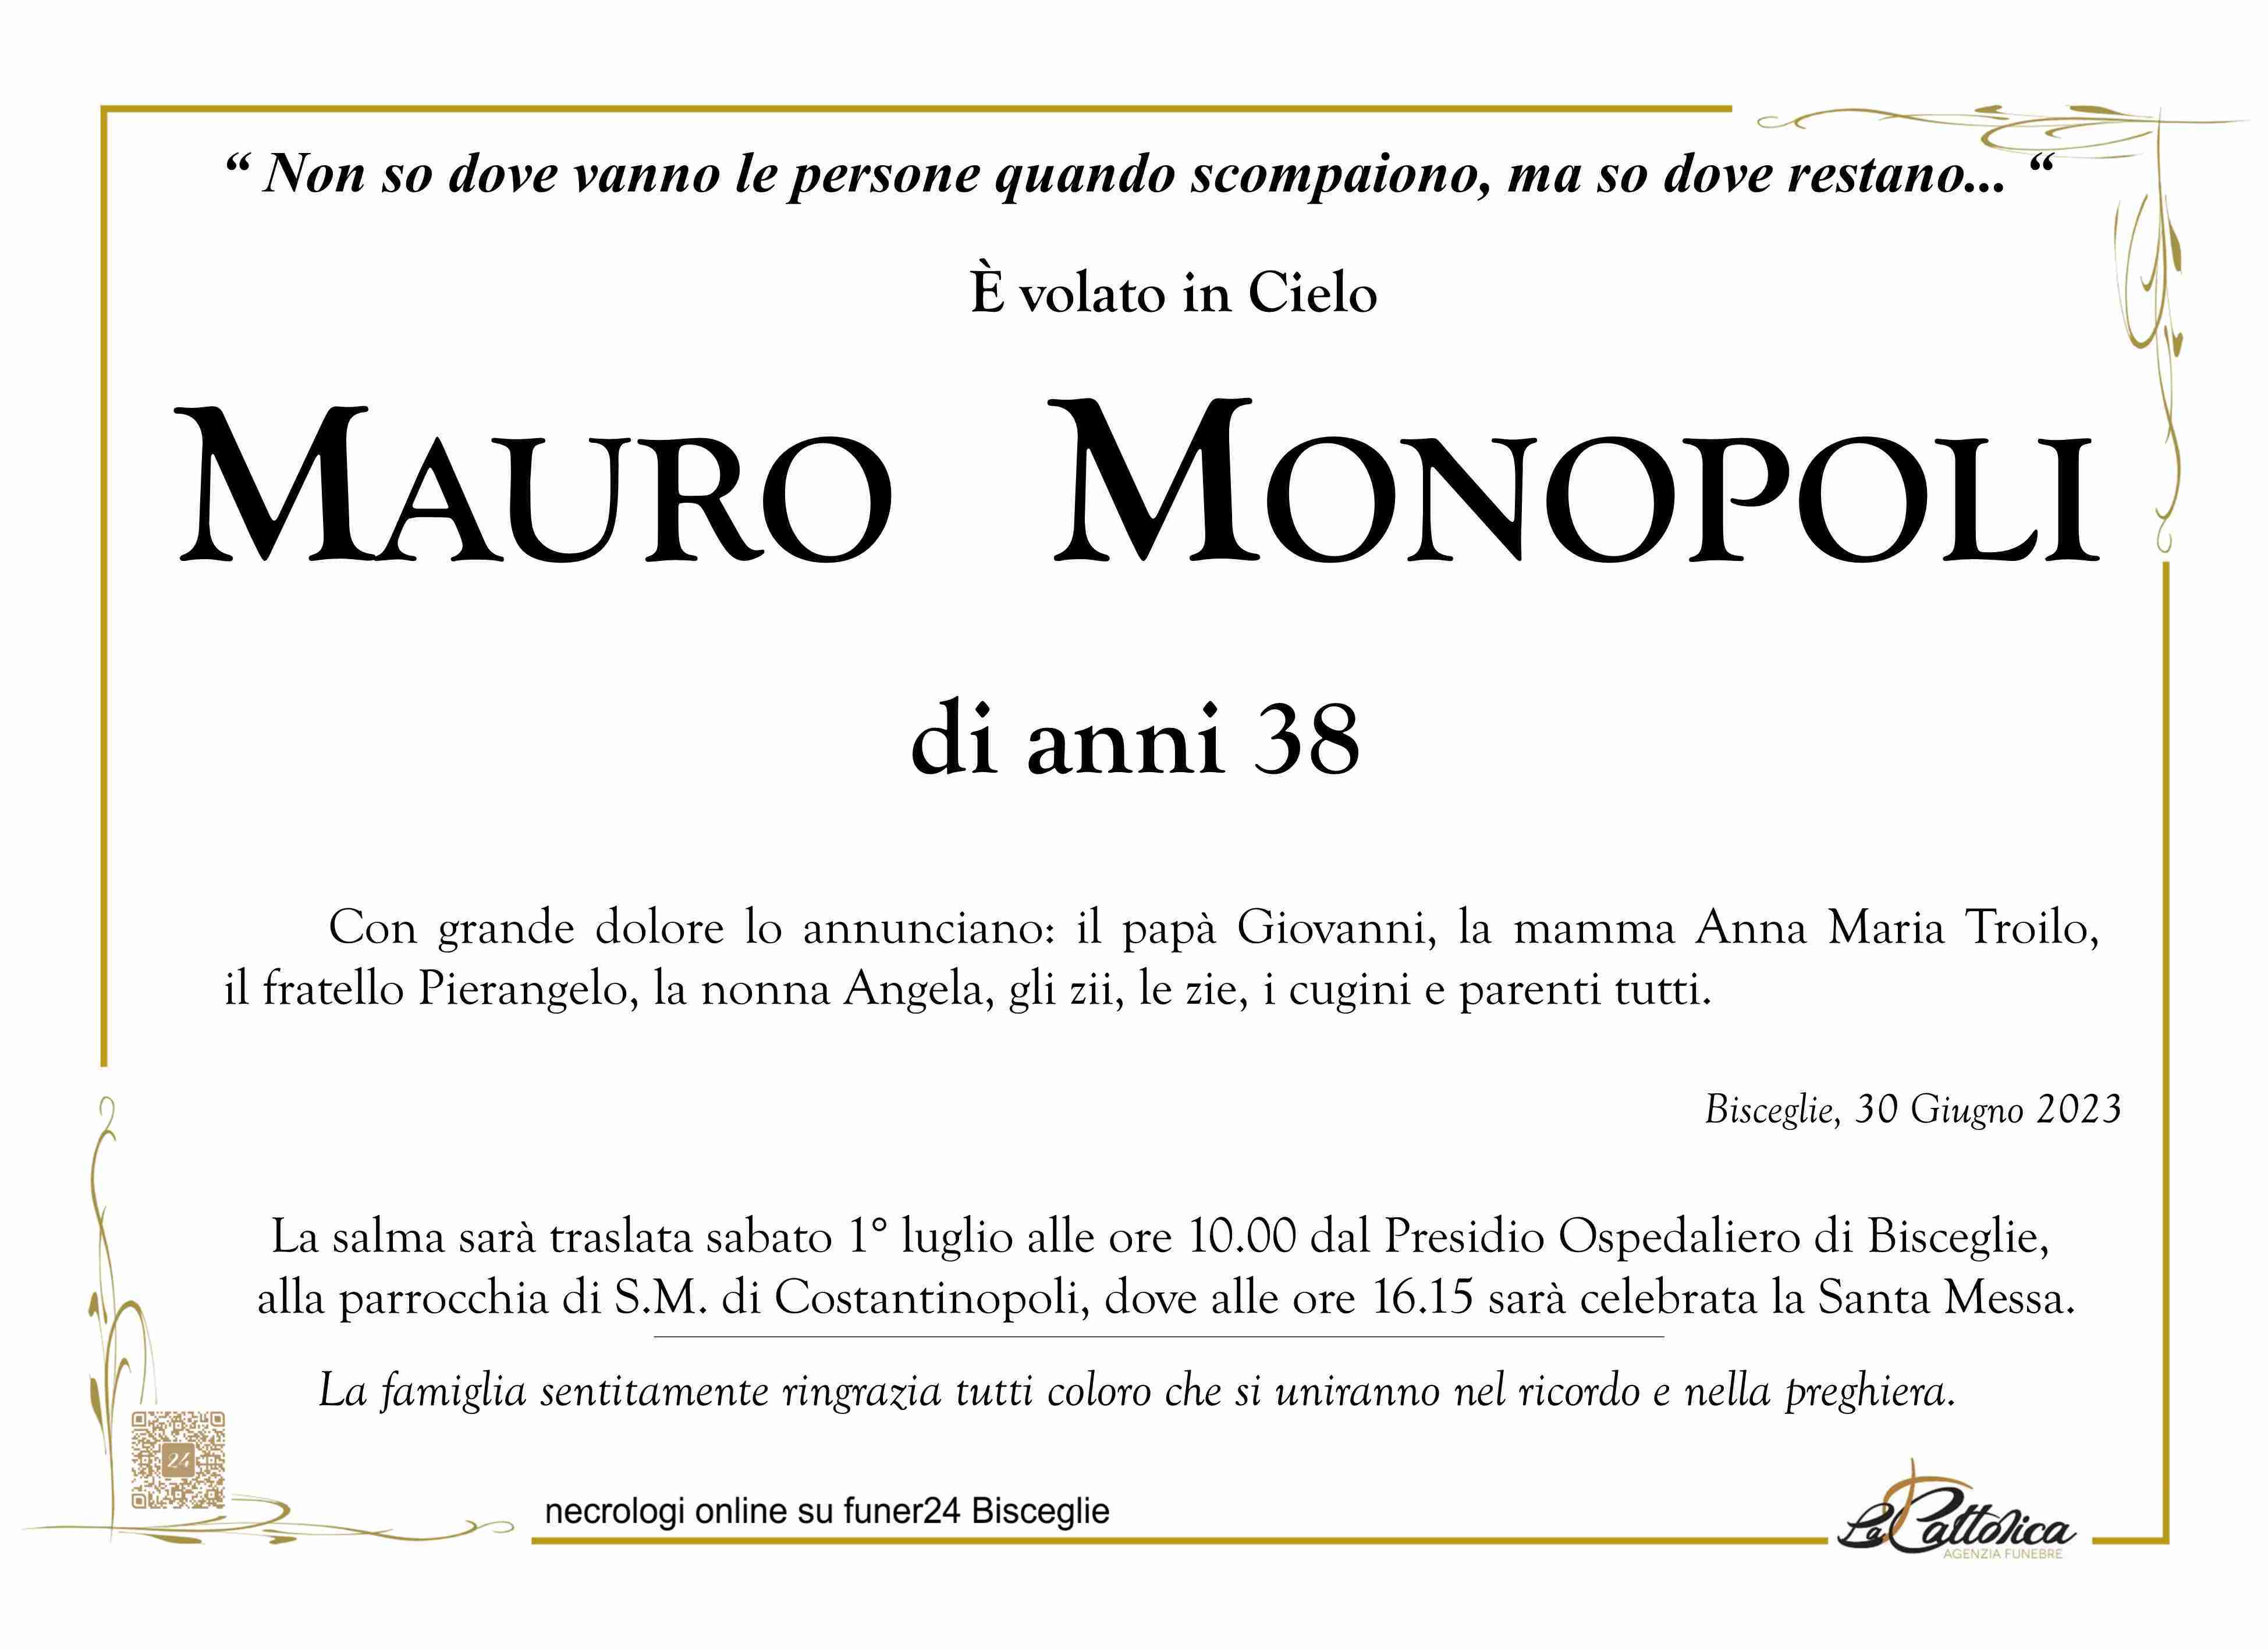 Monopoli Mauro